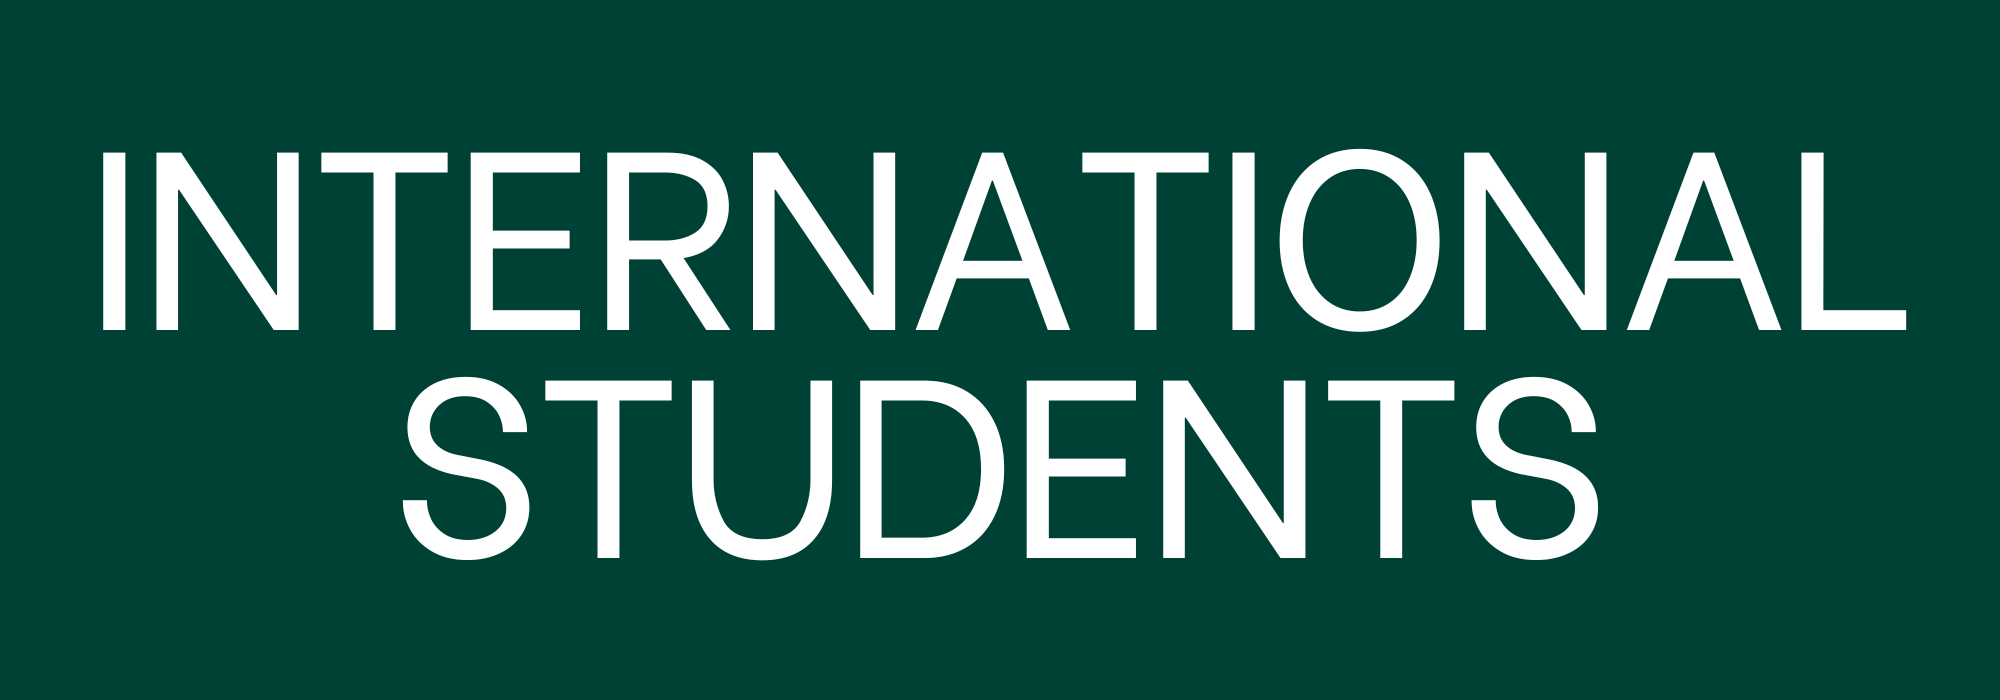 international students scholarship web page